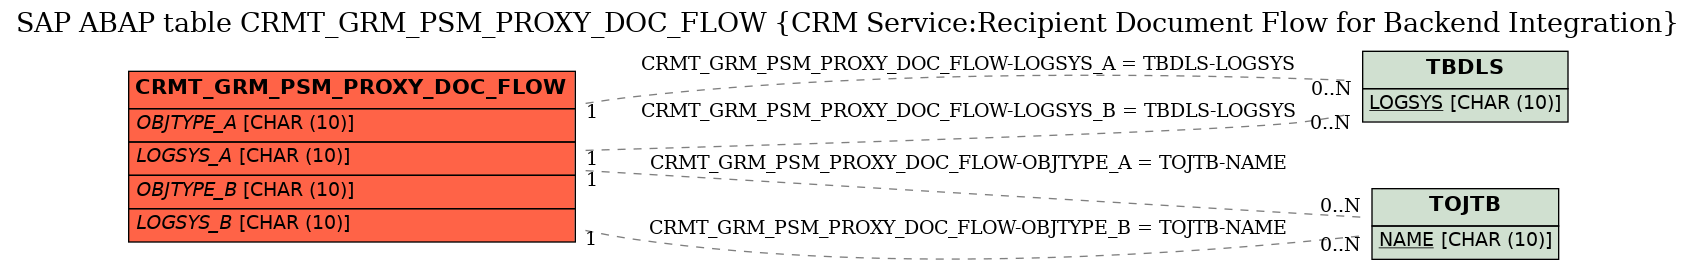 E-R Diagram for table CRMT_GRM_PSM_PROXY_DOC_FLOW (CRM Service:Recipient Document Flow for Backend Integration)